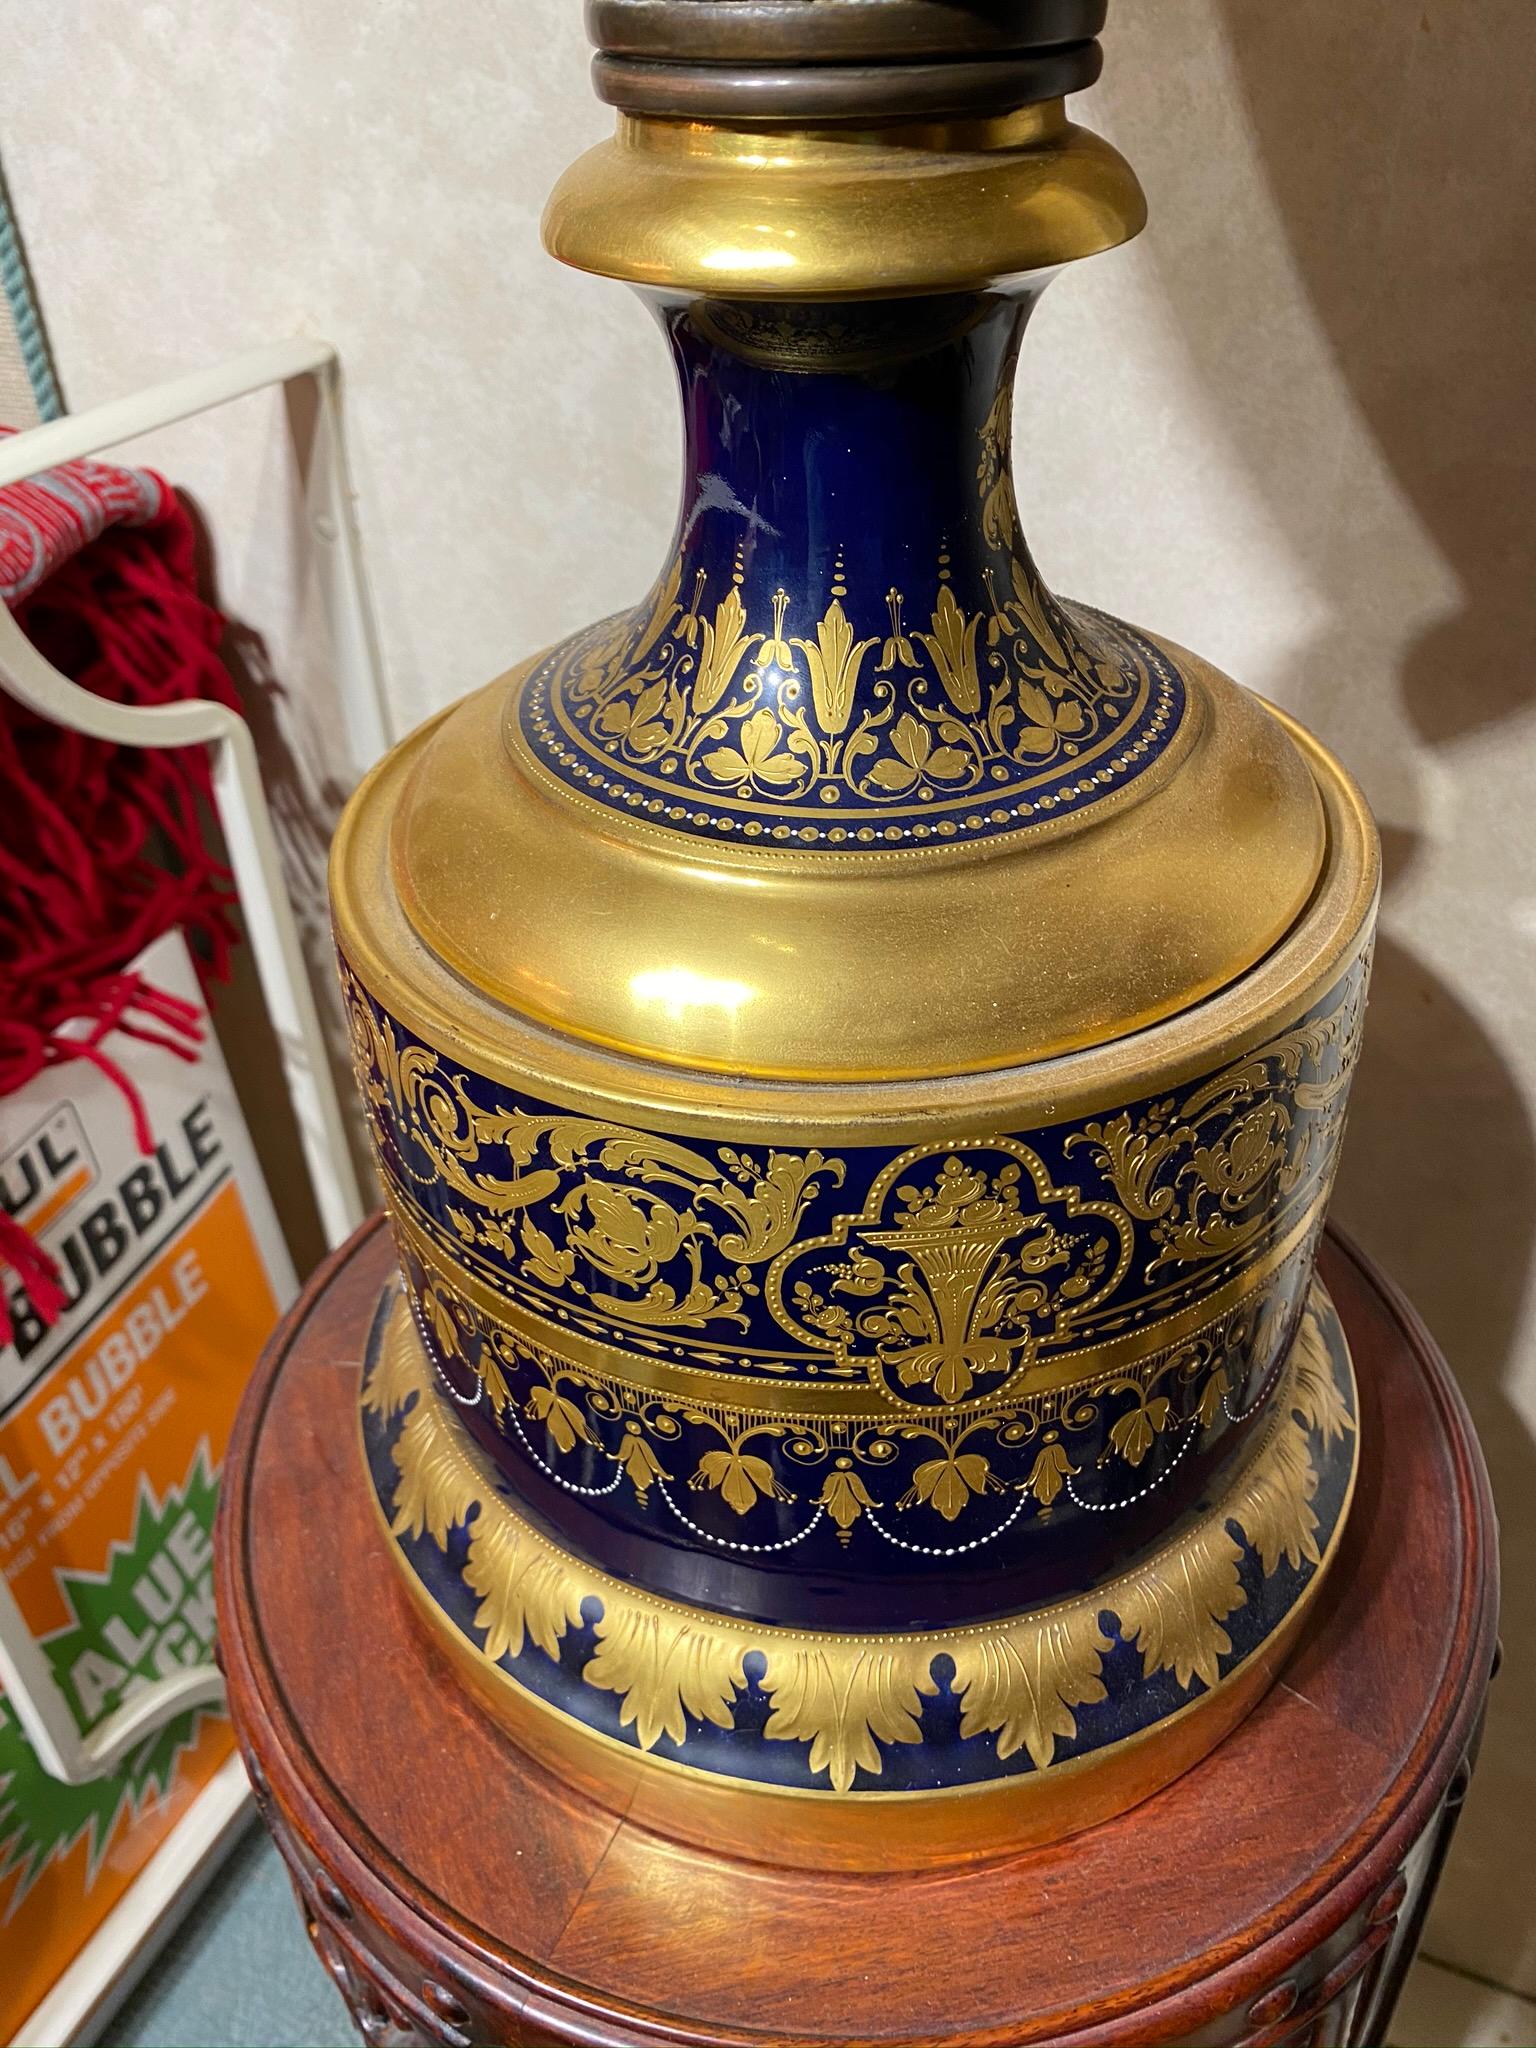 19th century Royal Vienna hand painted urn